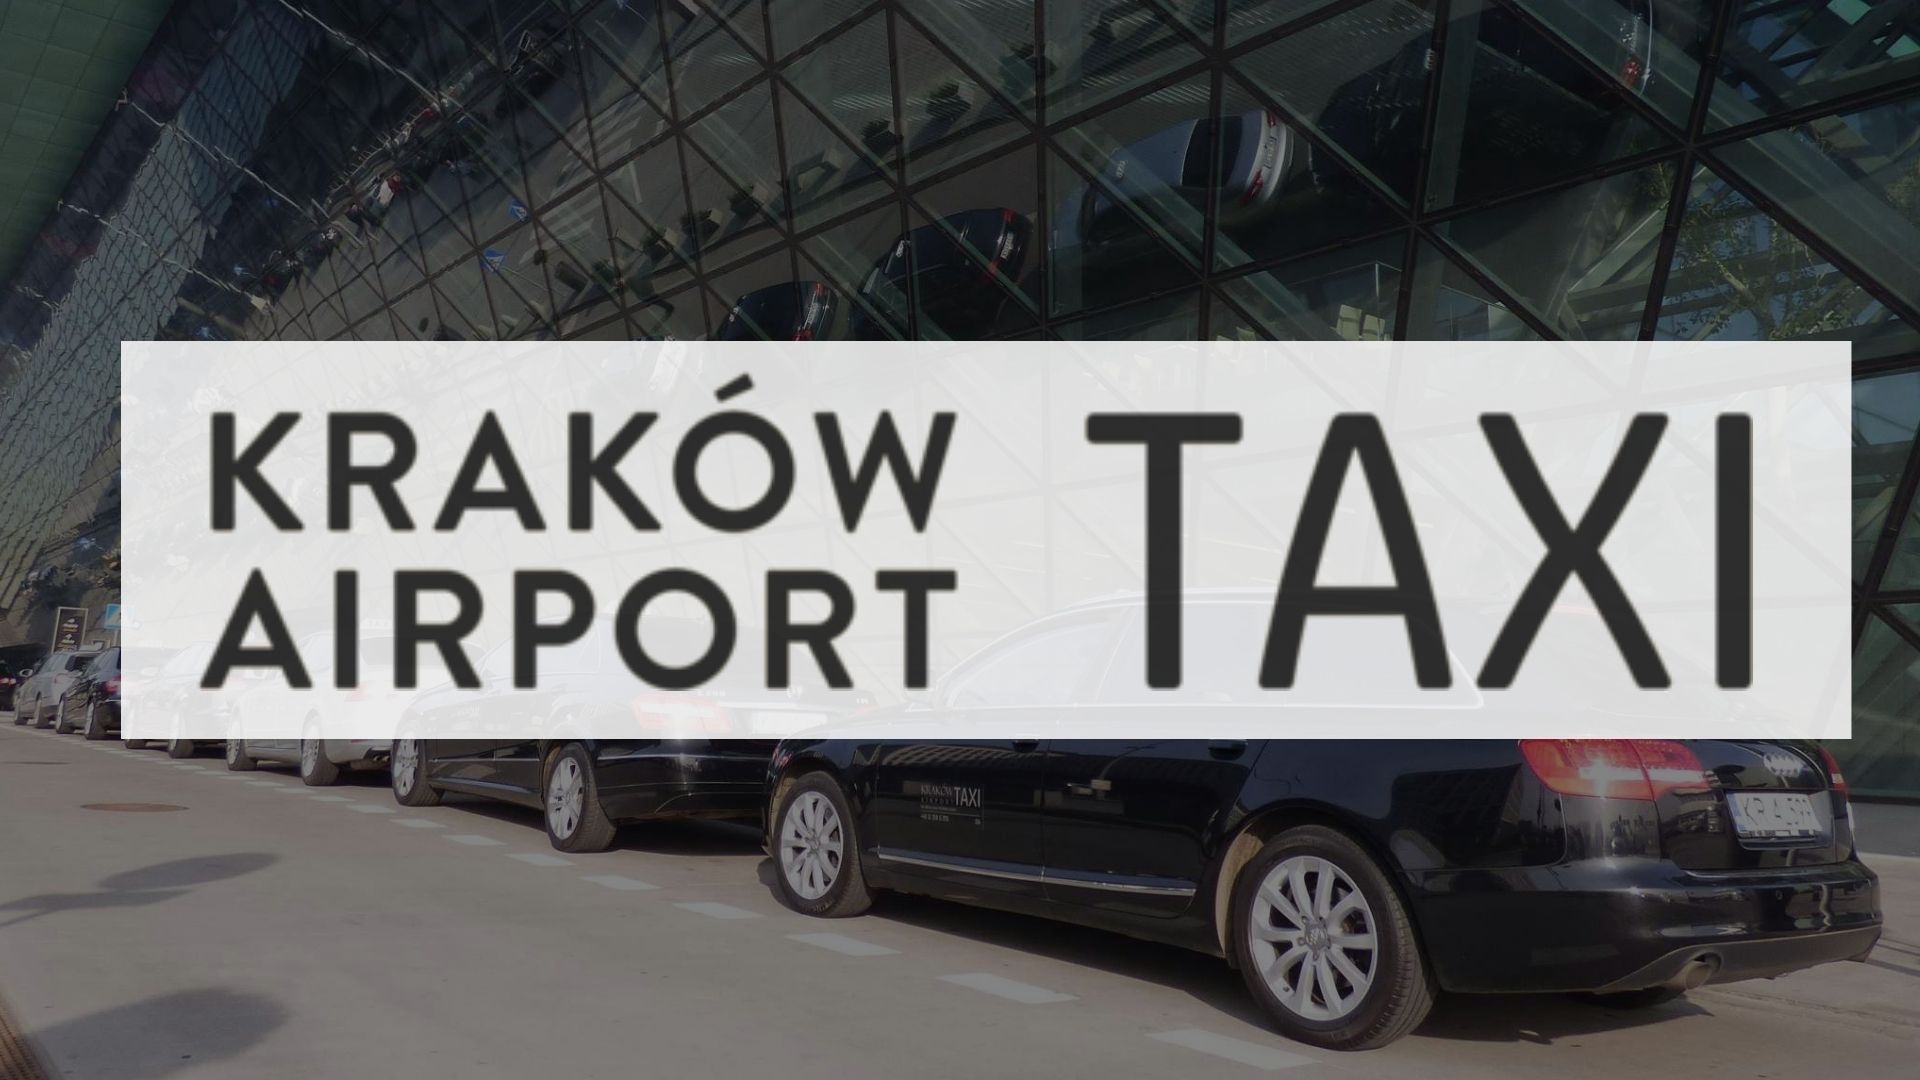 Kraków Airport Taxi